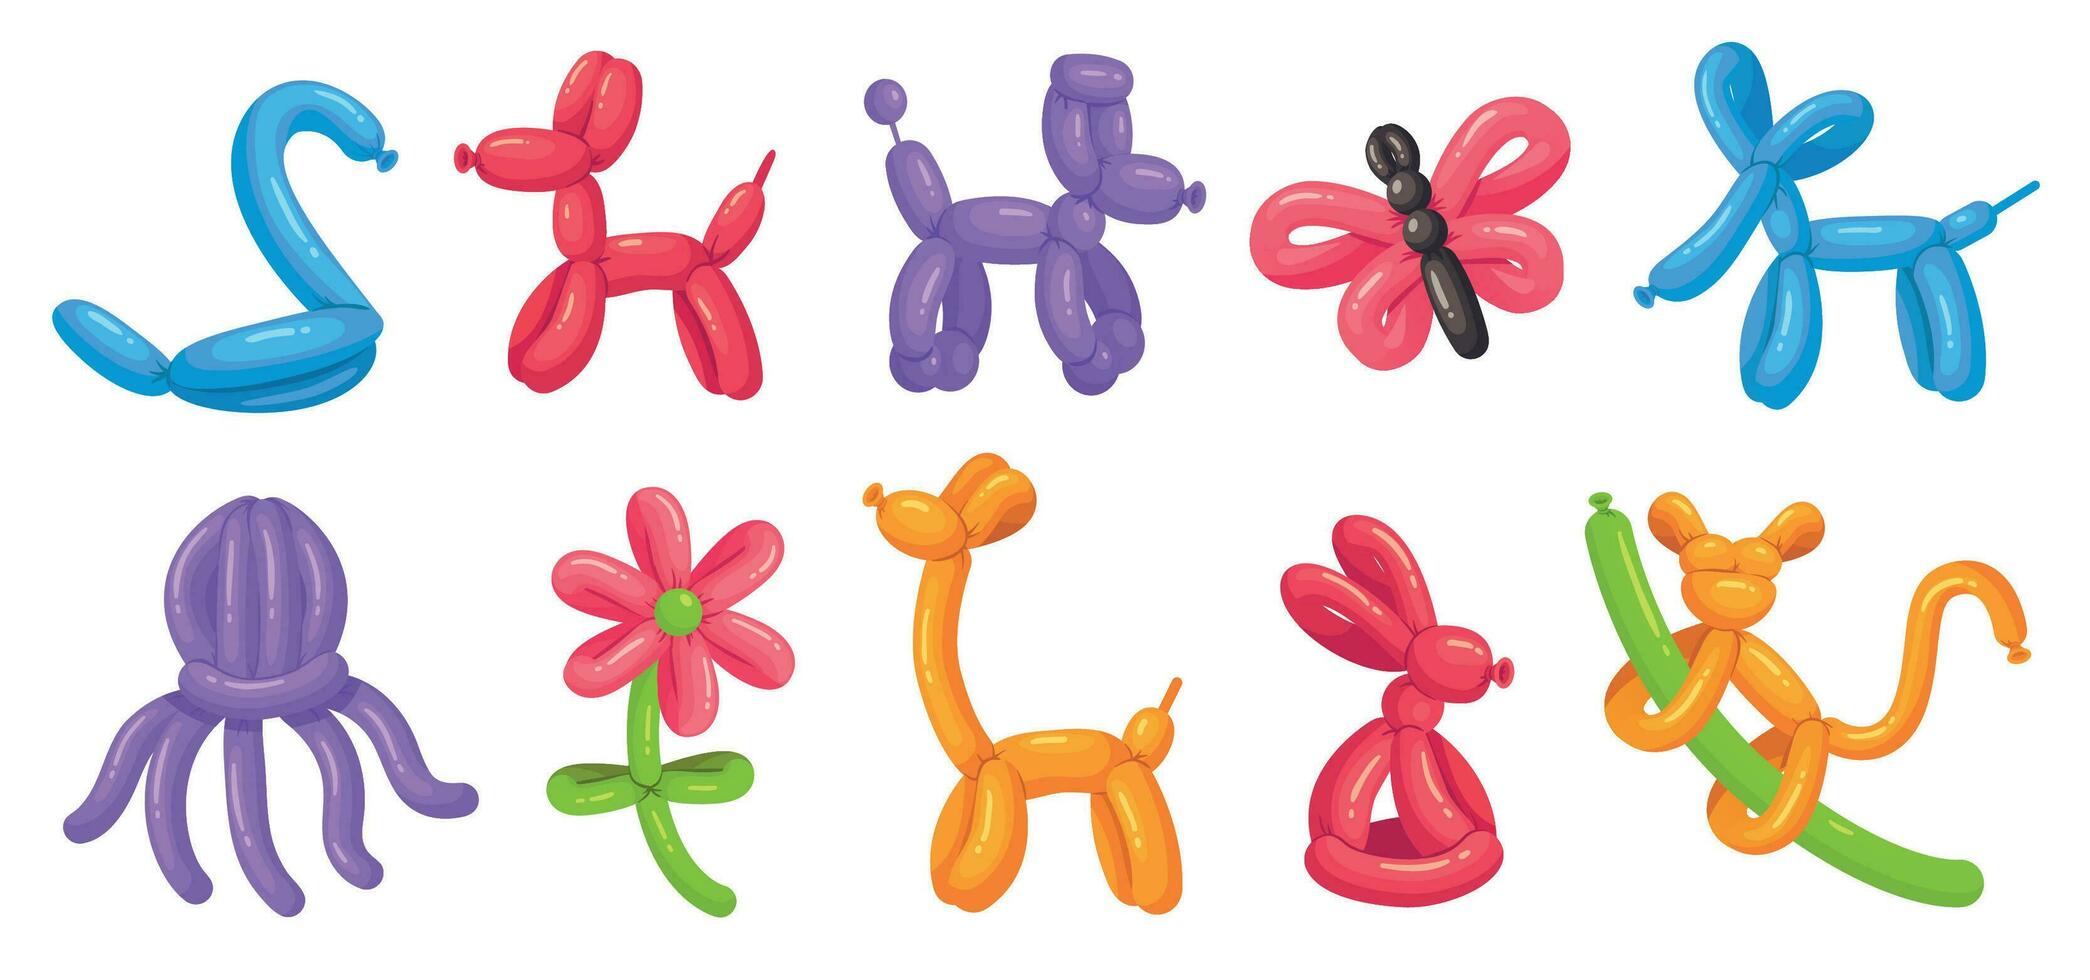 Cartoon balloon animals. Birthday balloons, holiday celebration colorful toy and party animal balloon vector illustration set